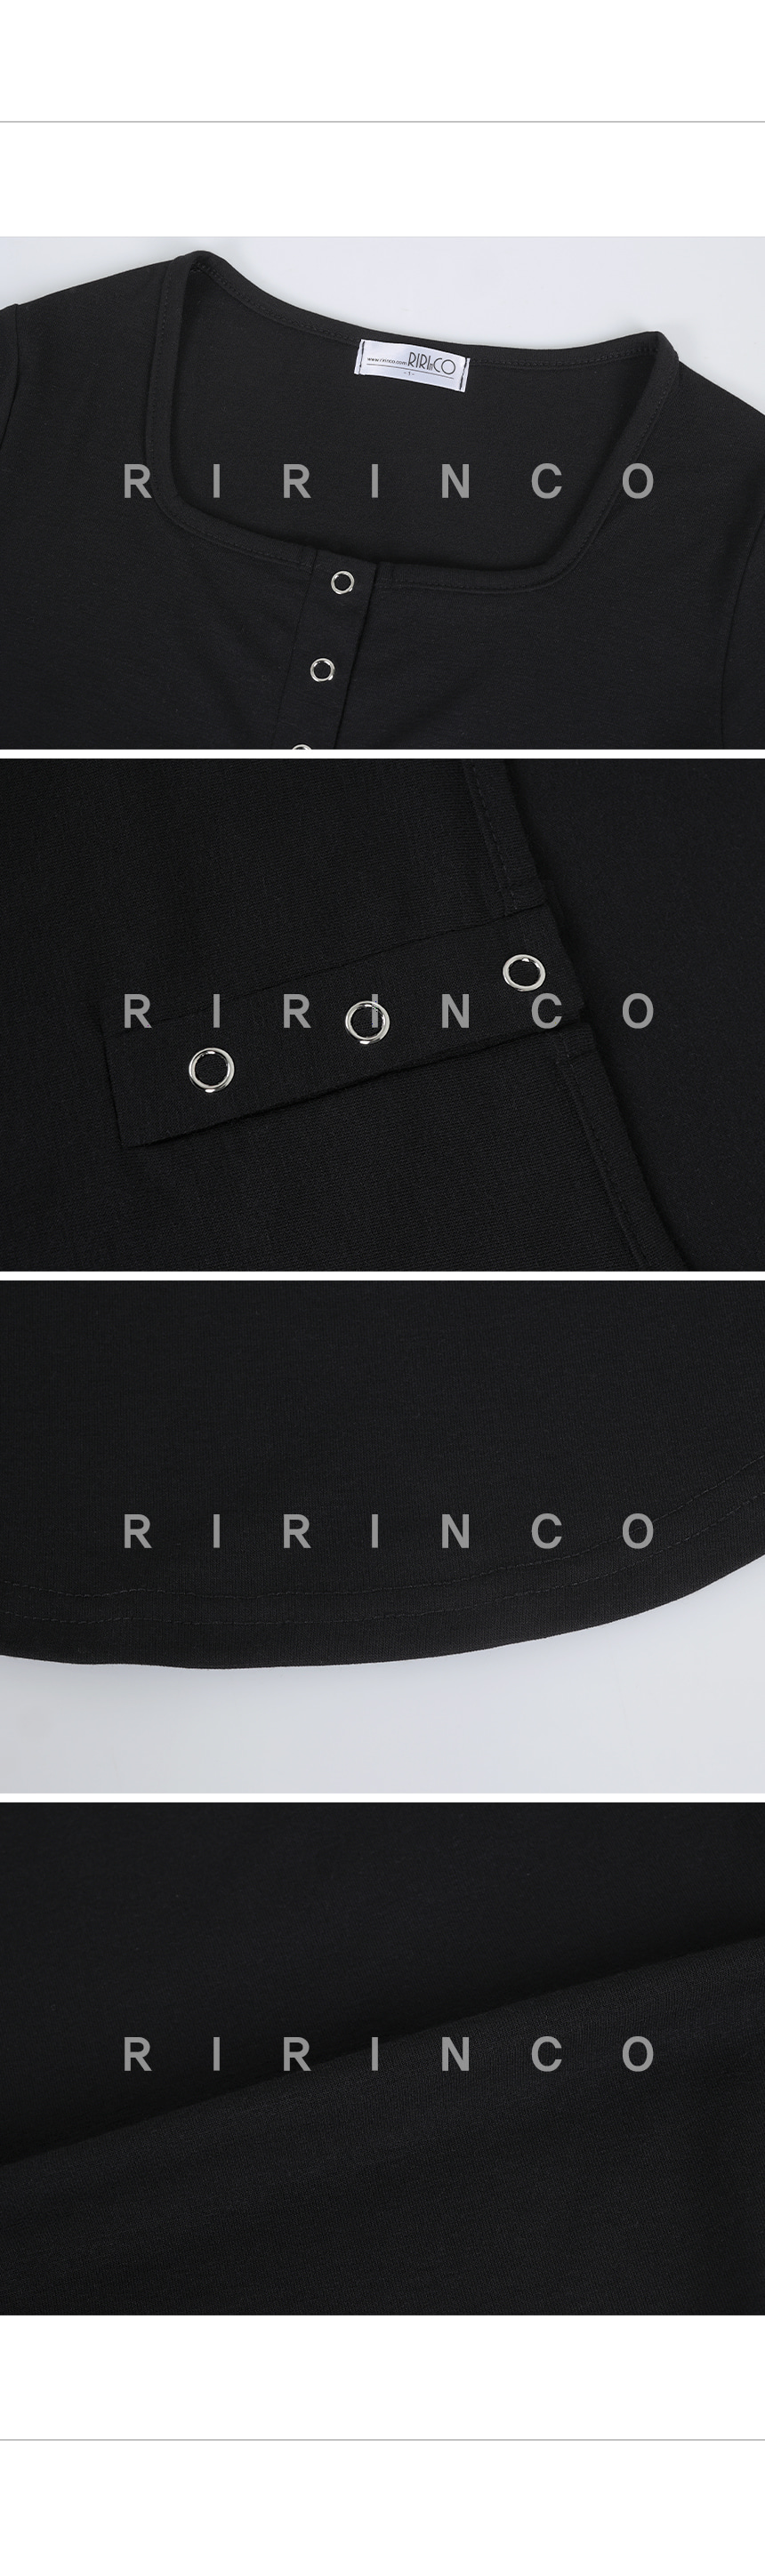 RIRINCO スクエアネックラインセミクロップドTシャツ